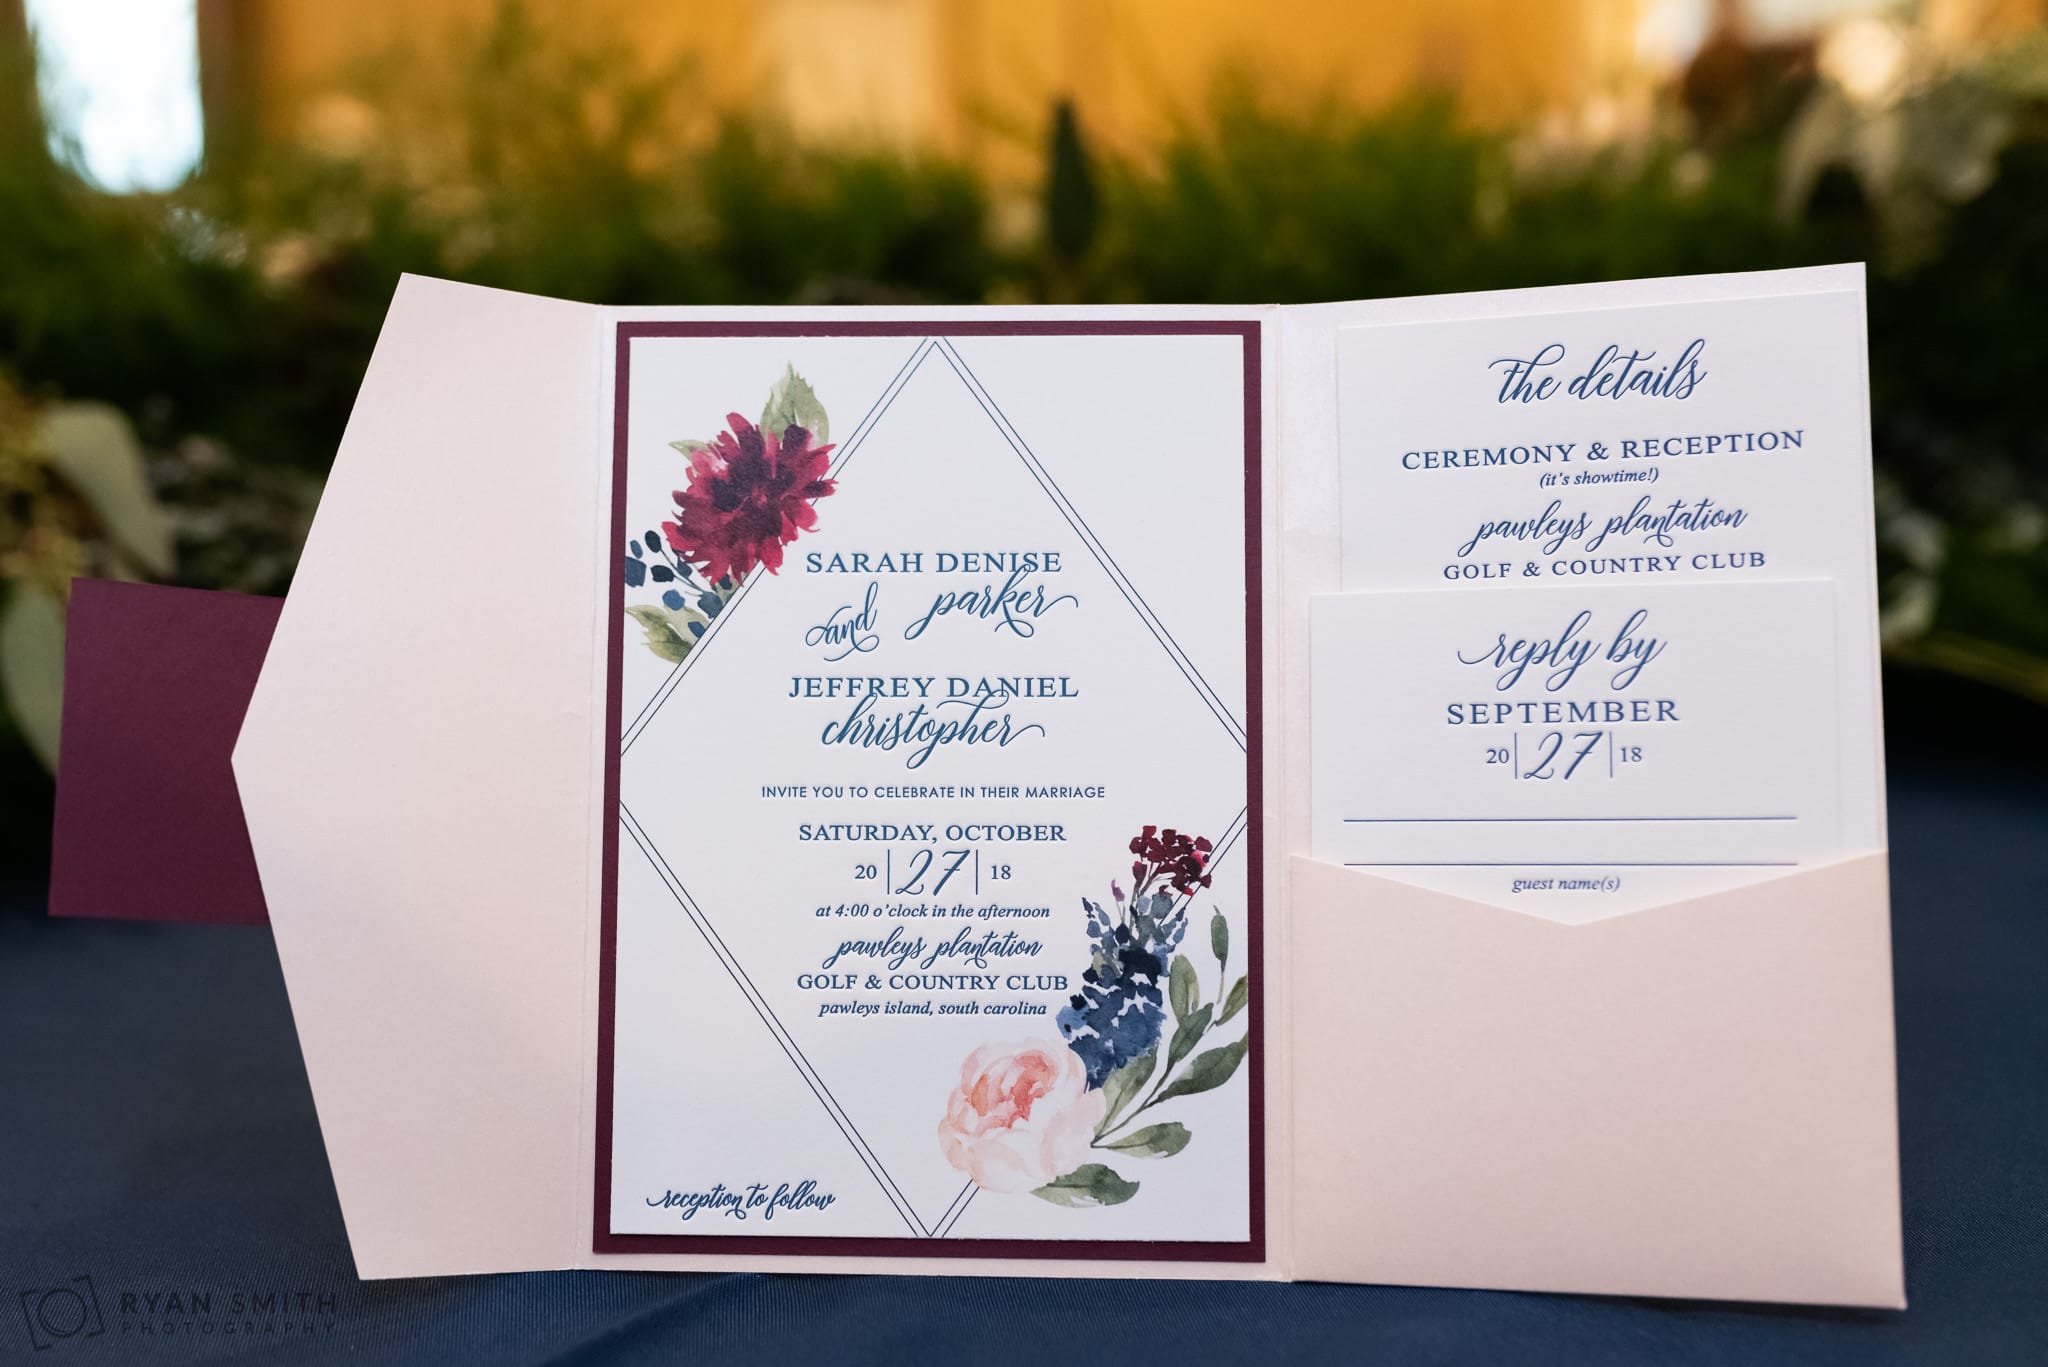 Wedding invitation detail shot